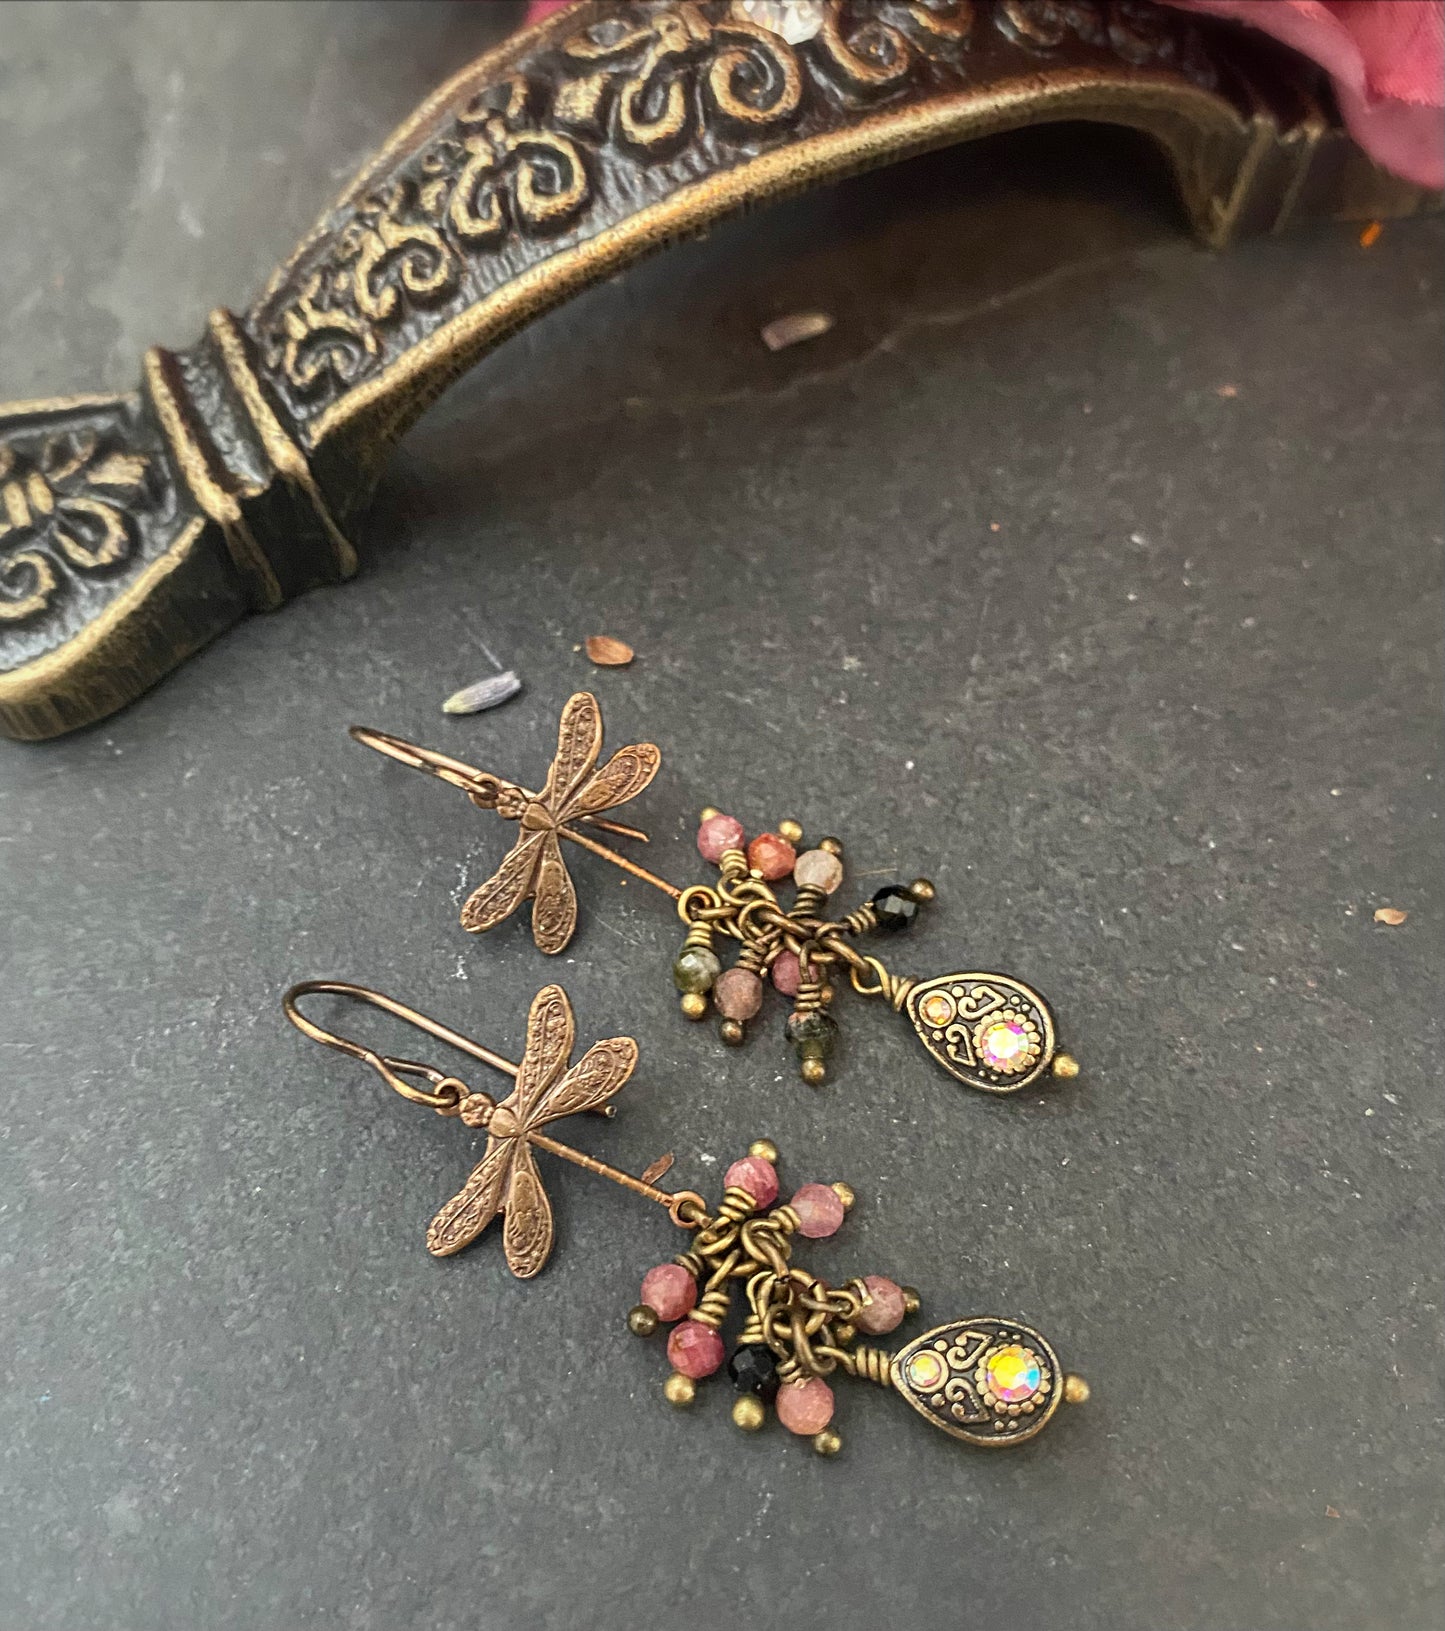 Watermelon tourmaline stone, dragonfly chocolate bronze metal, rhinestone, earrings.